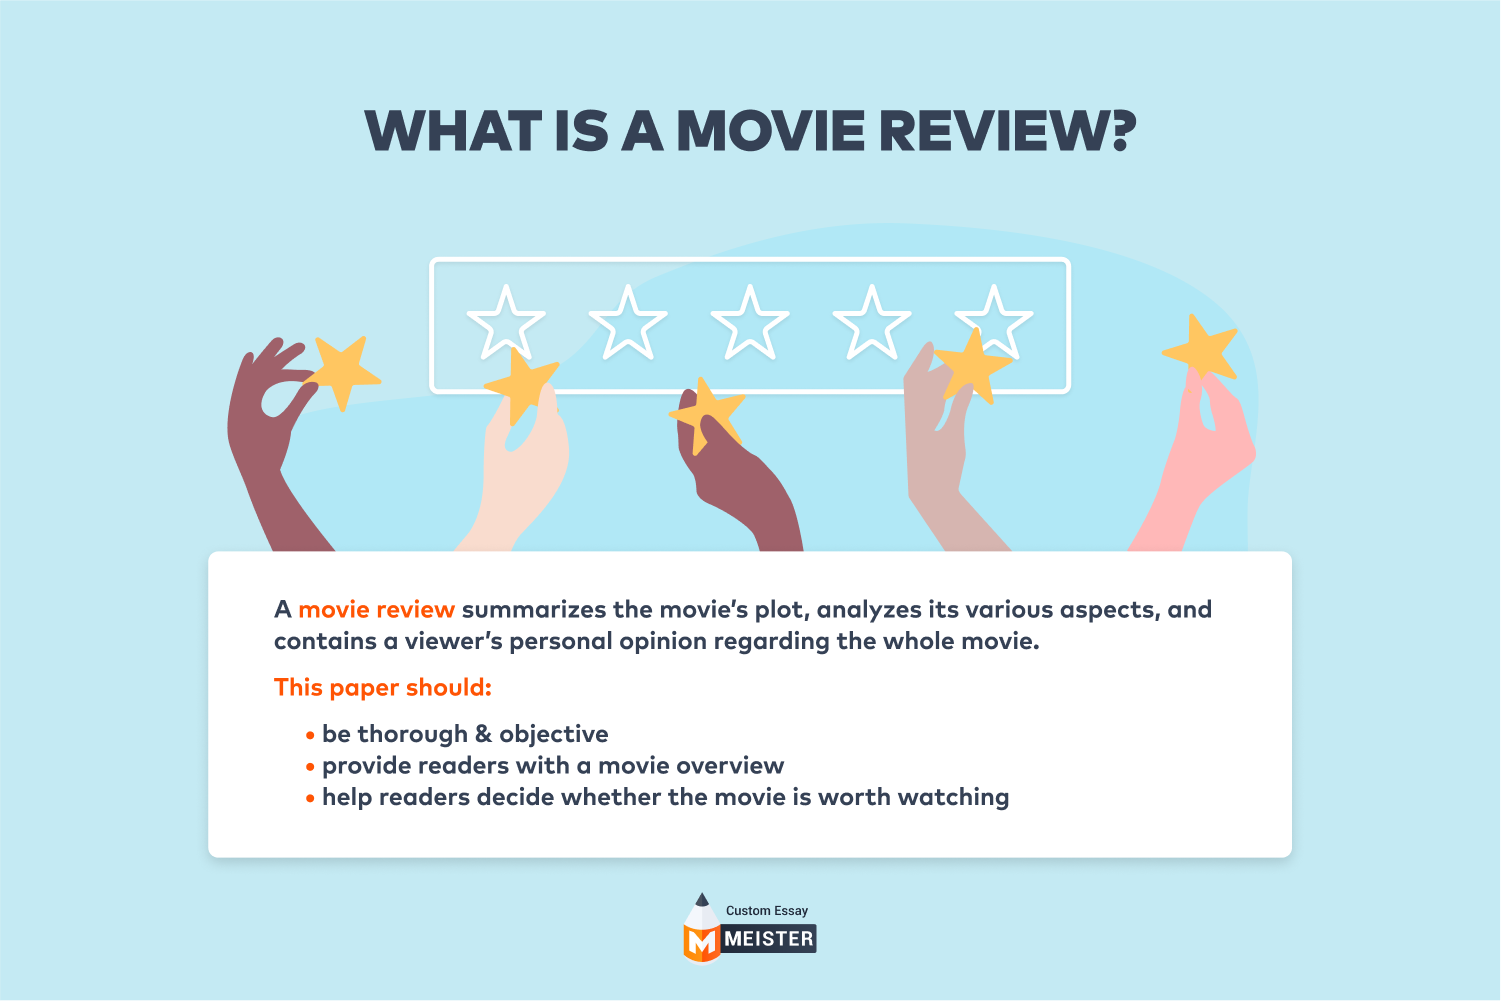 write movie reviews and get paid